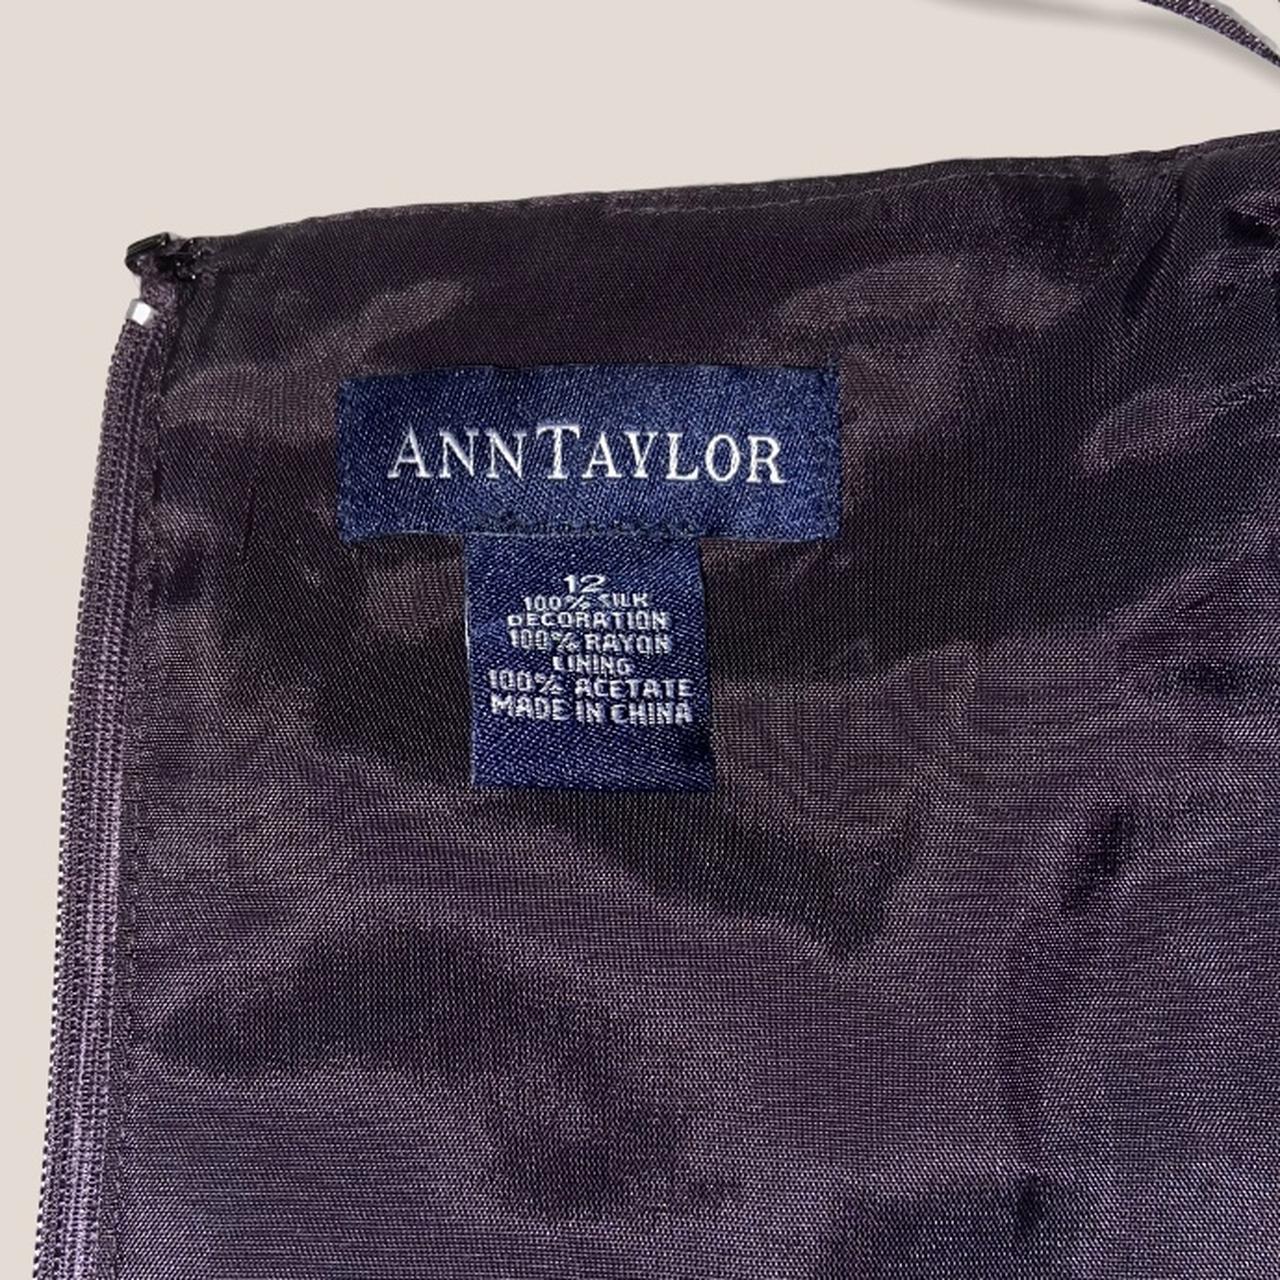 Ann Taylor Women's Purple and Black Corset (4)